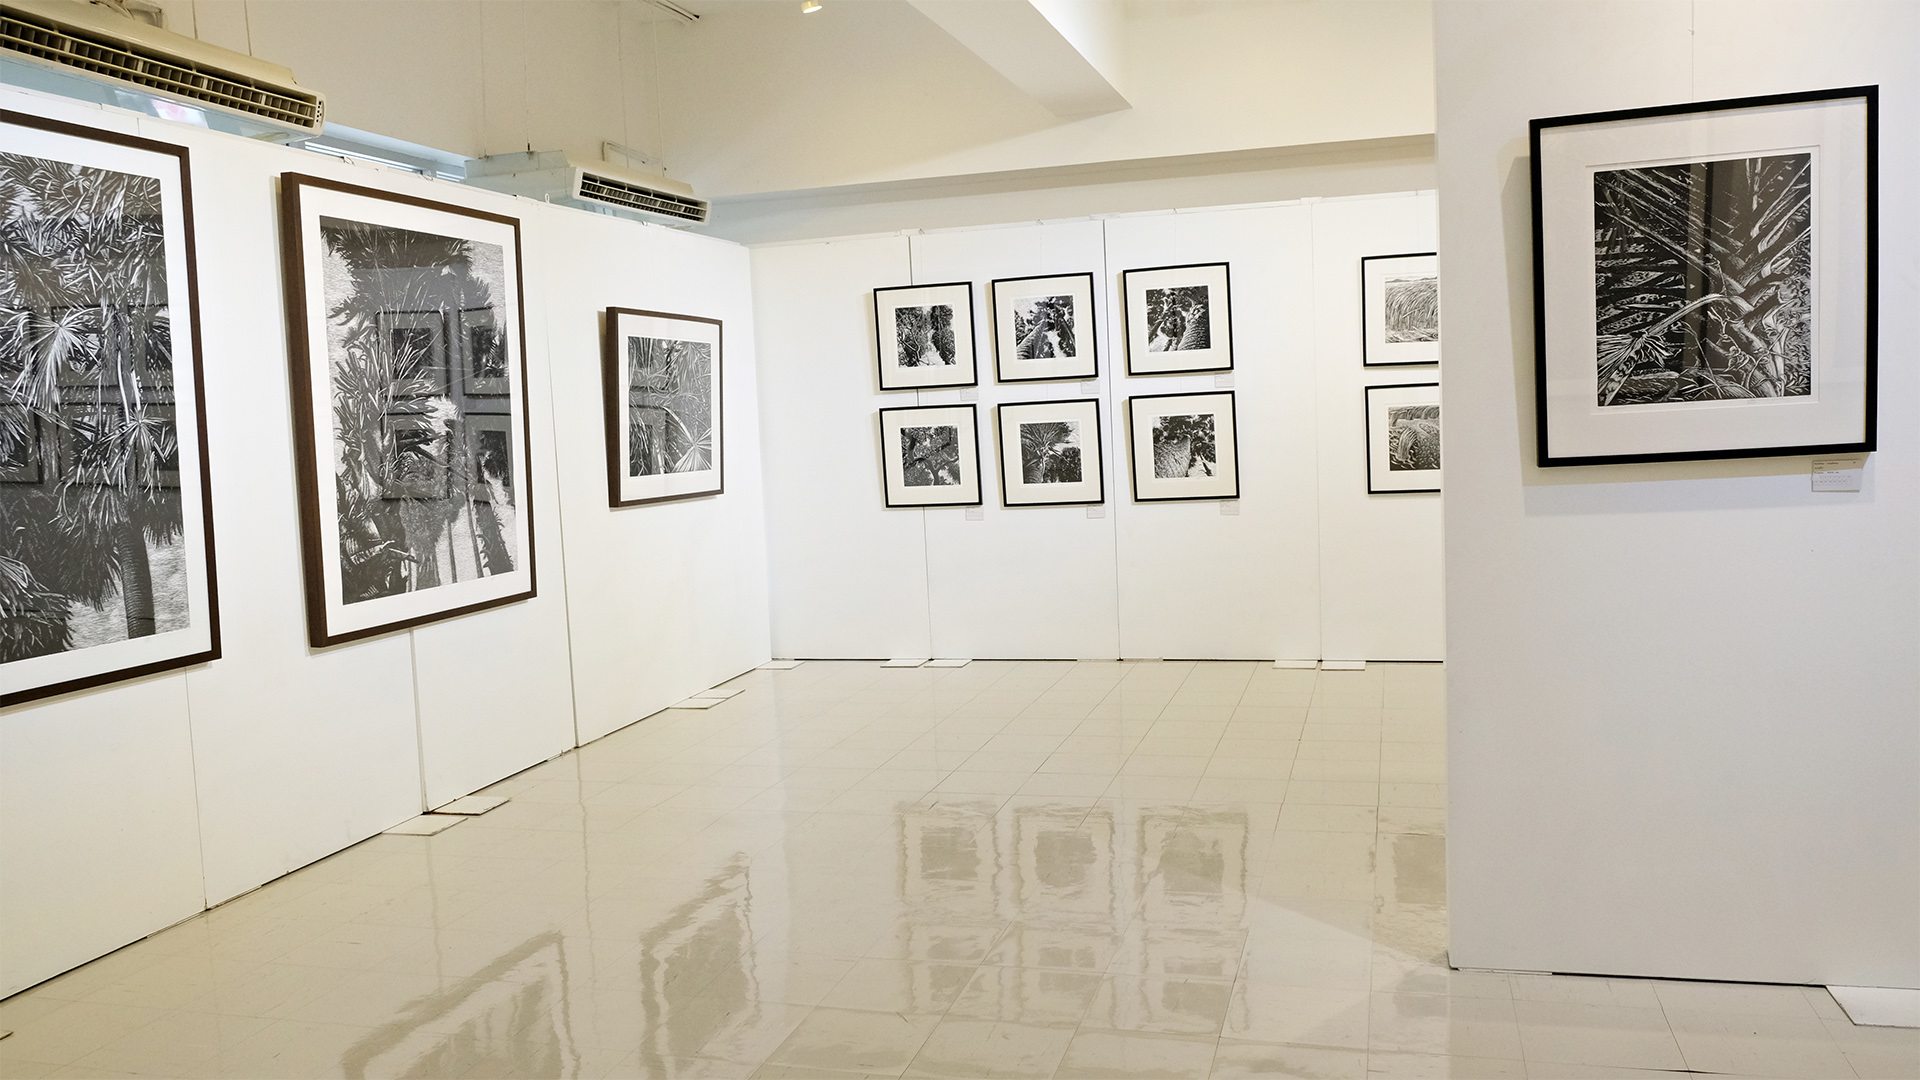 MAGIC FIELD Exhibitions By Monthian Yangthong | นิทรรศการมนตราแห่งท้องทุ่ง โดย มณเฑียร ยางทอง